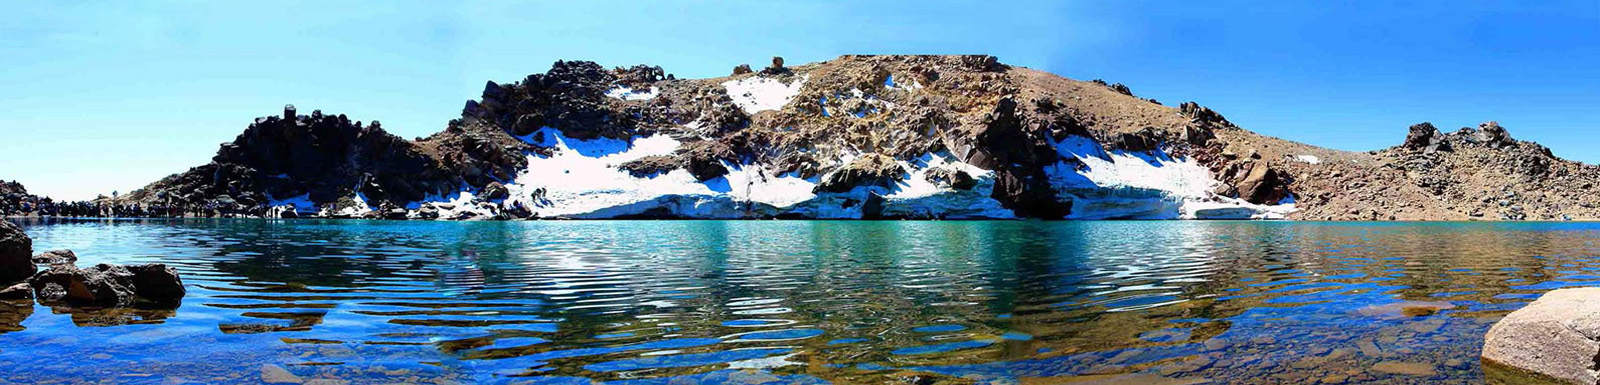 Sabalansko jezero-Ardabil province